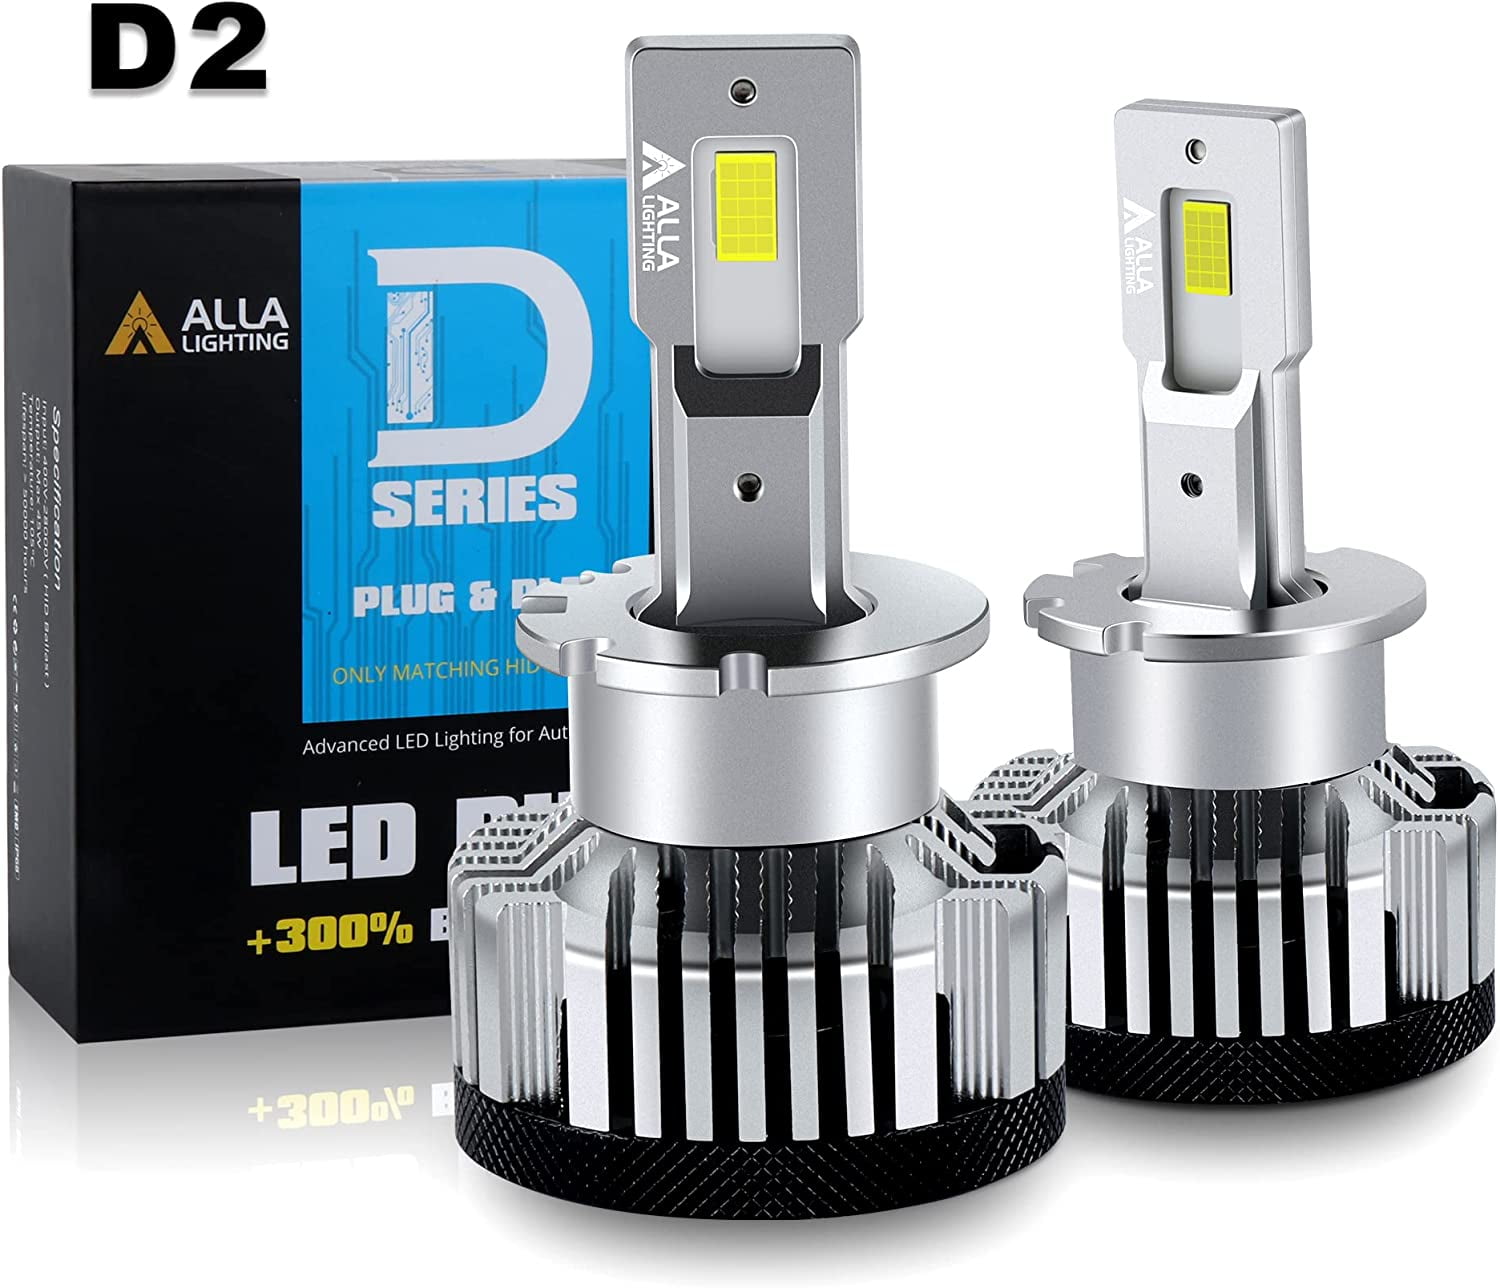 D2S/R HID Headlights - FIREWIRE LEDs